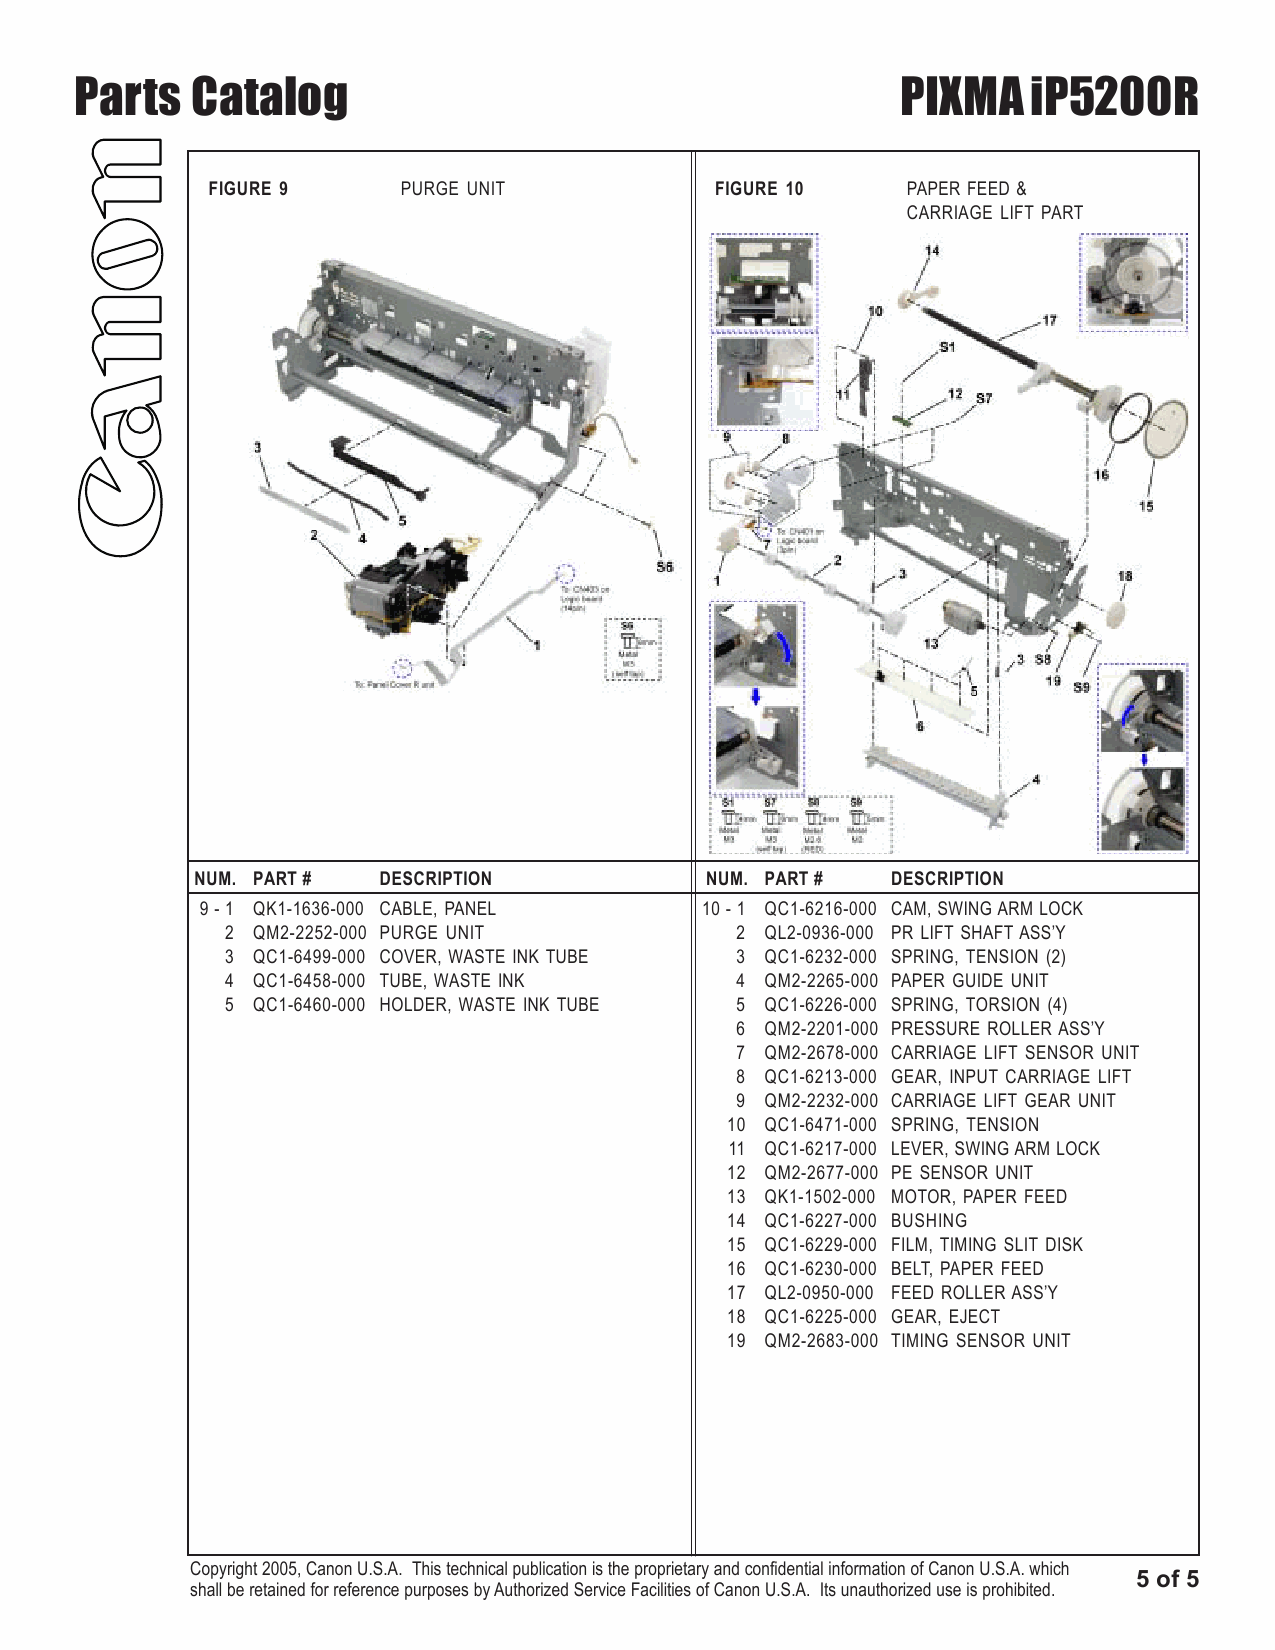 Canon PIXMA iP5200R Parts Catalog-6